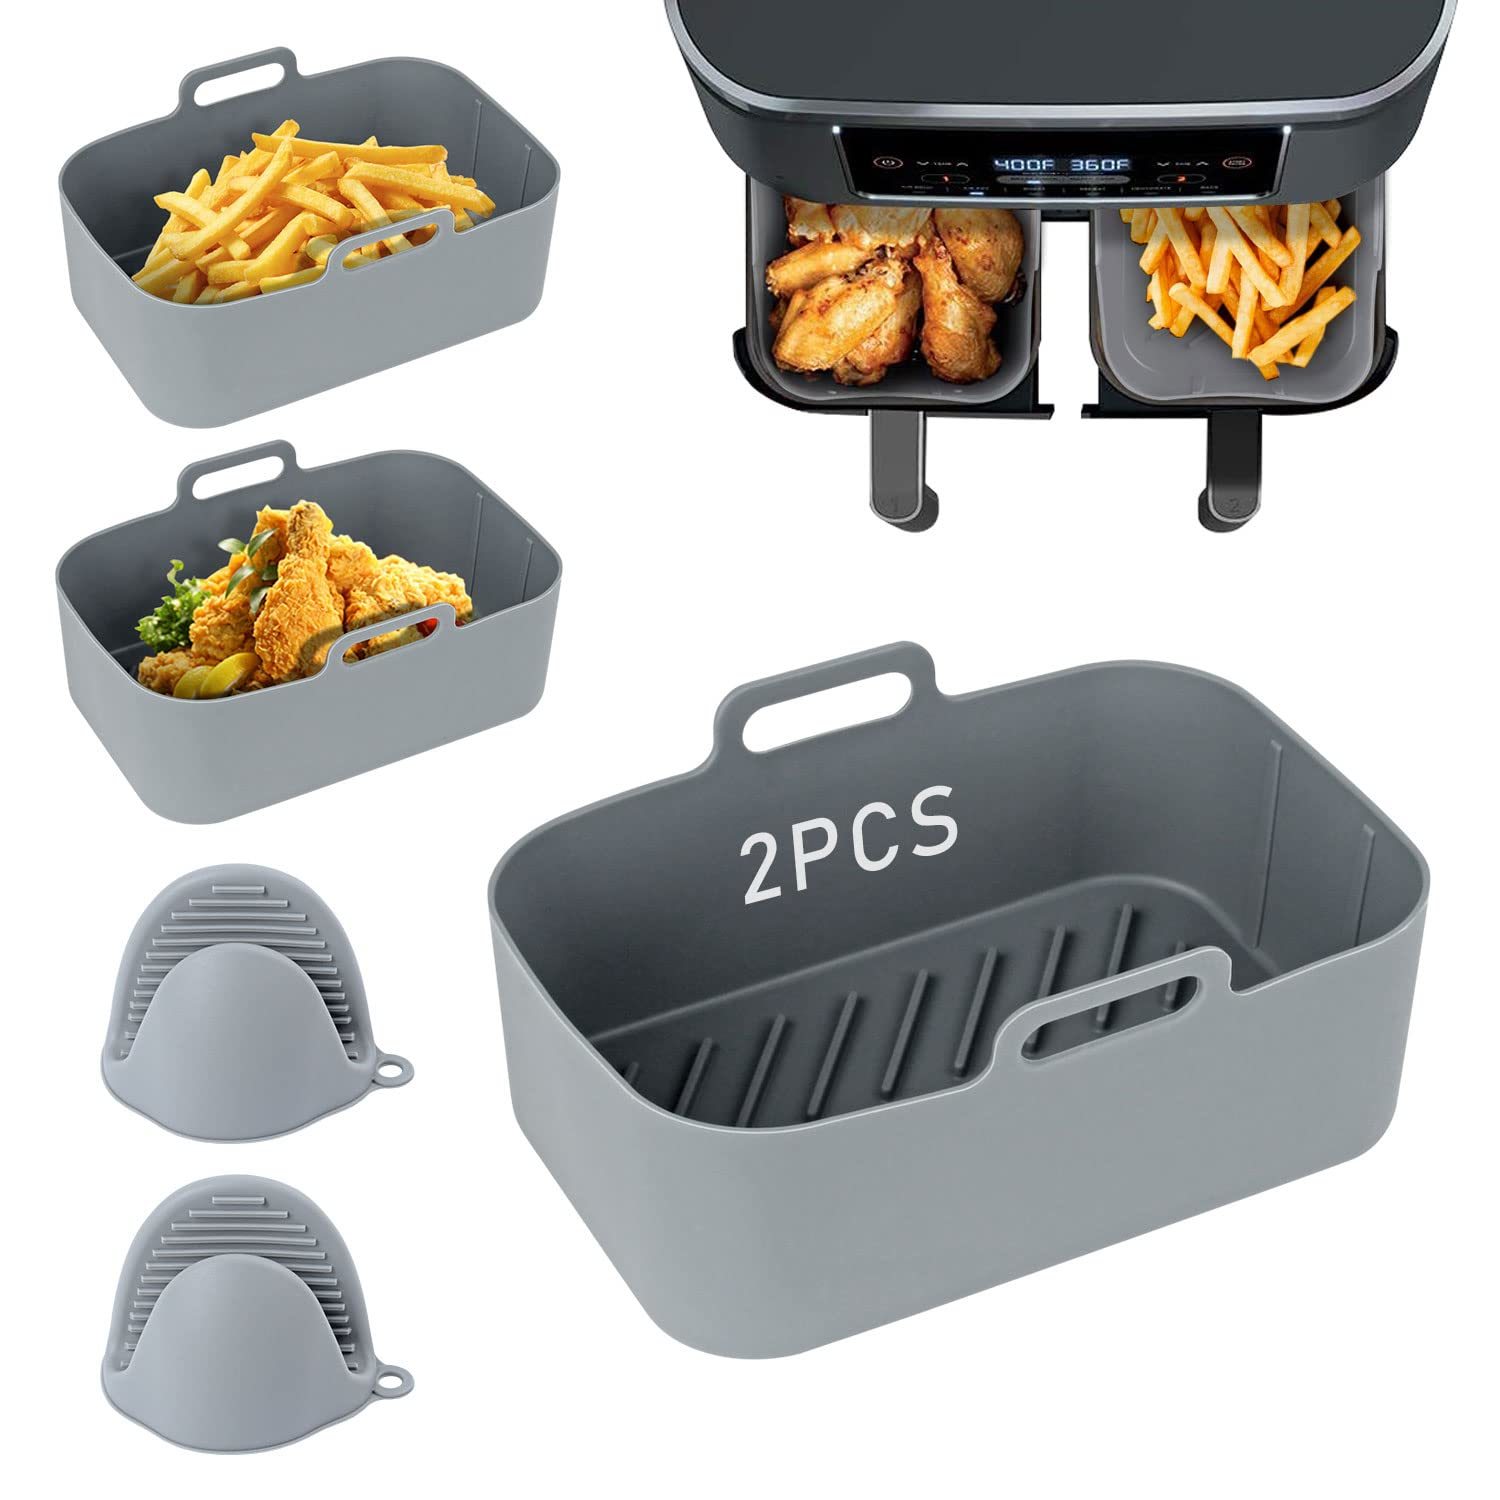 2 Pack Air Fryer Silicone Pot For Ninja Foodi Dz201/dz401 8qt